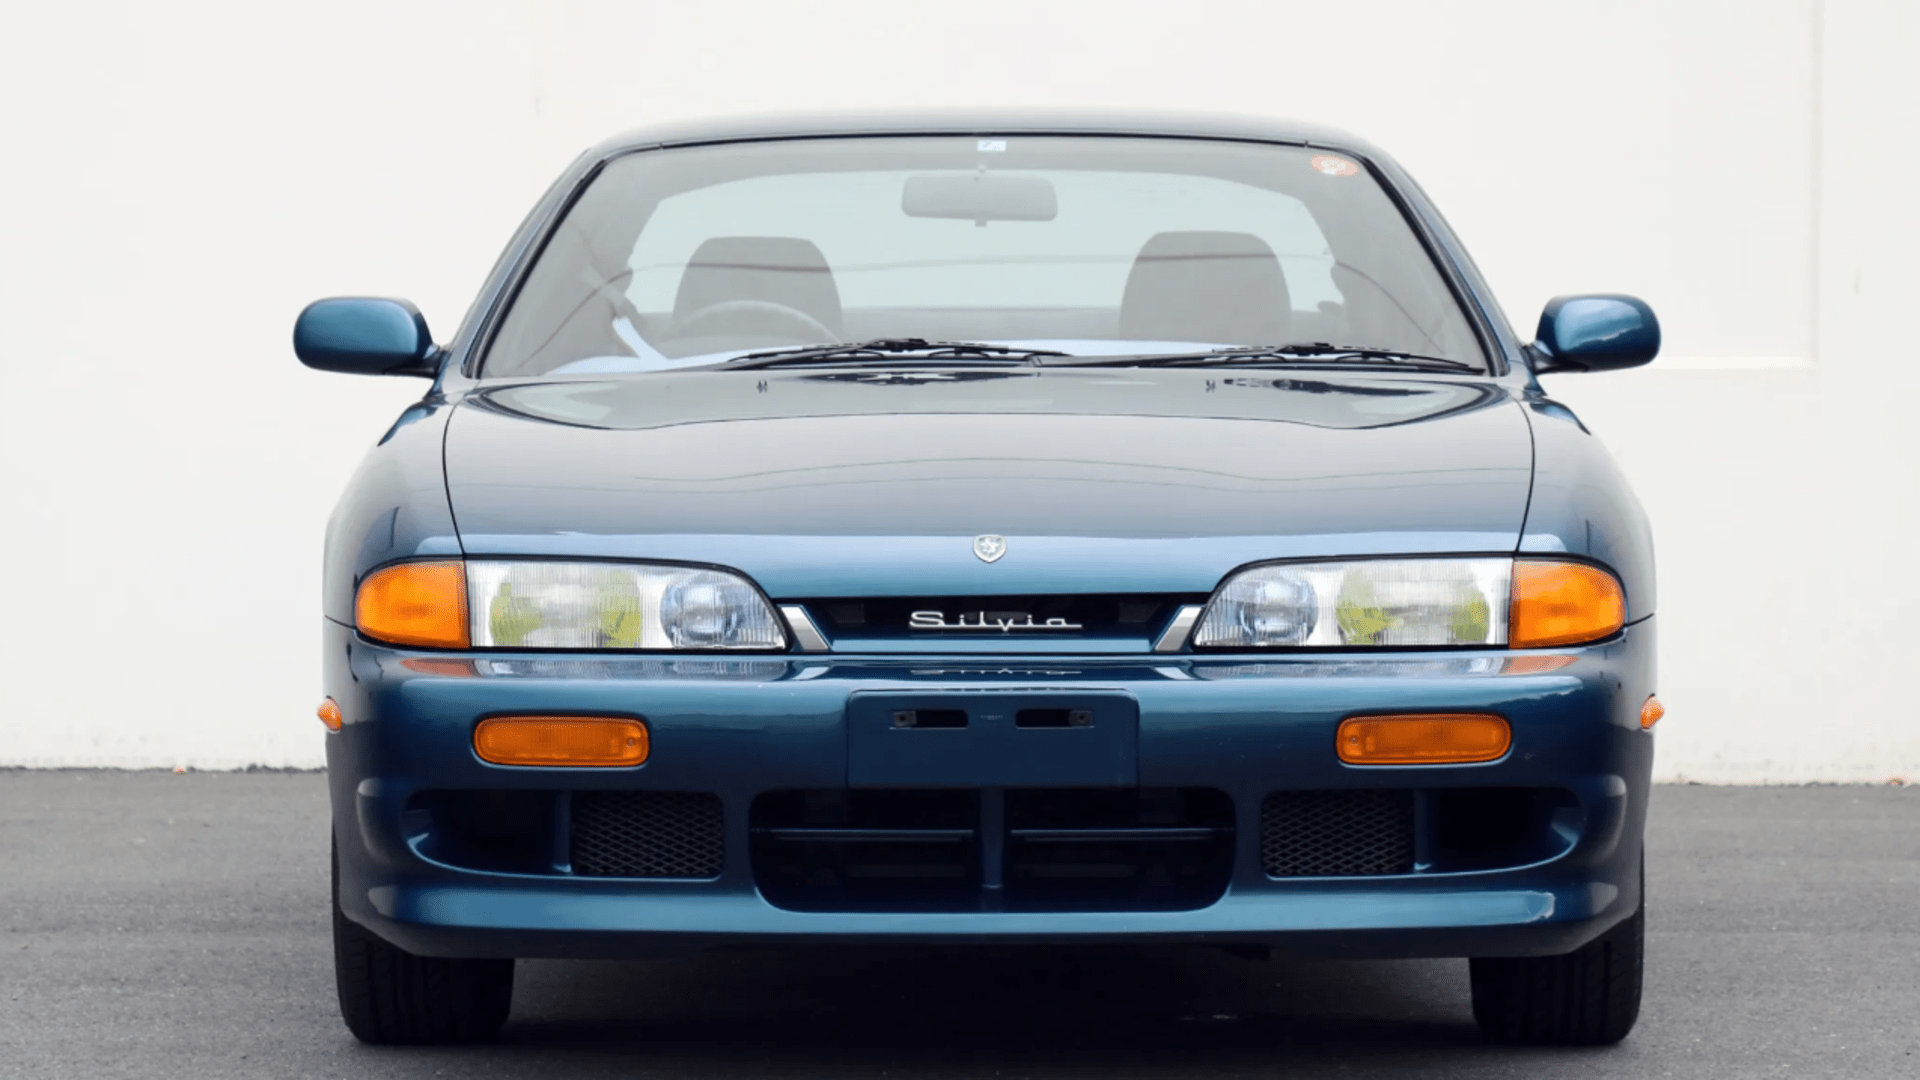 1990s Nissan Silvia S14